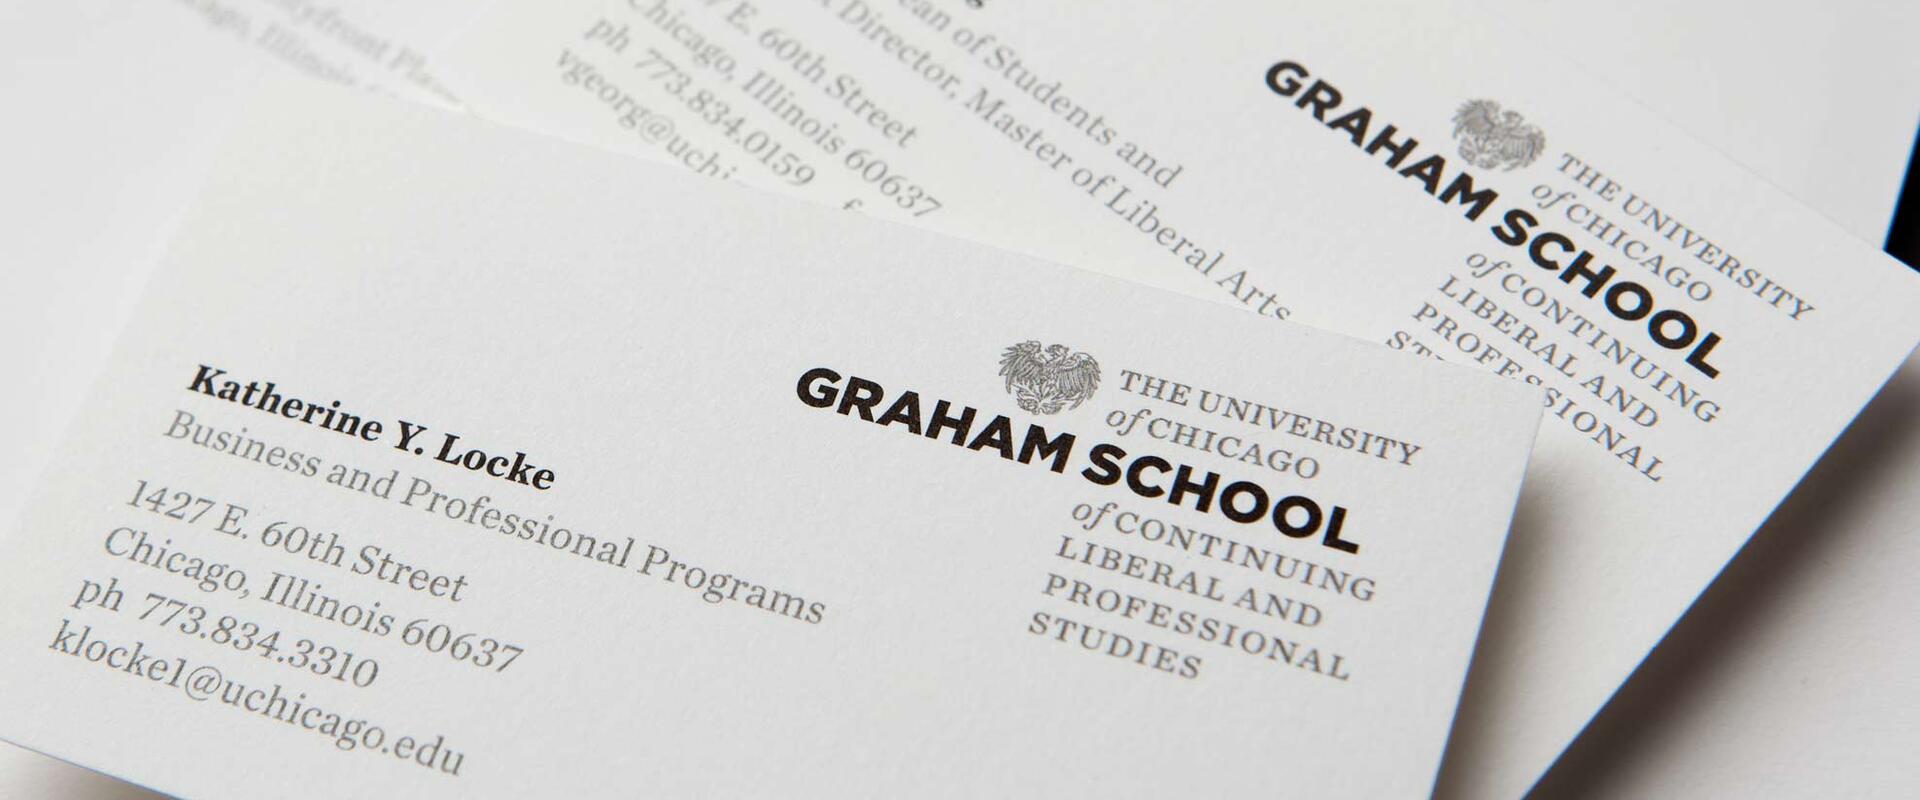 19A-63_Graham School Branding Program_Bart Crosby/Joanna Vodopivec